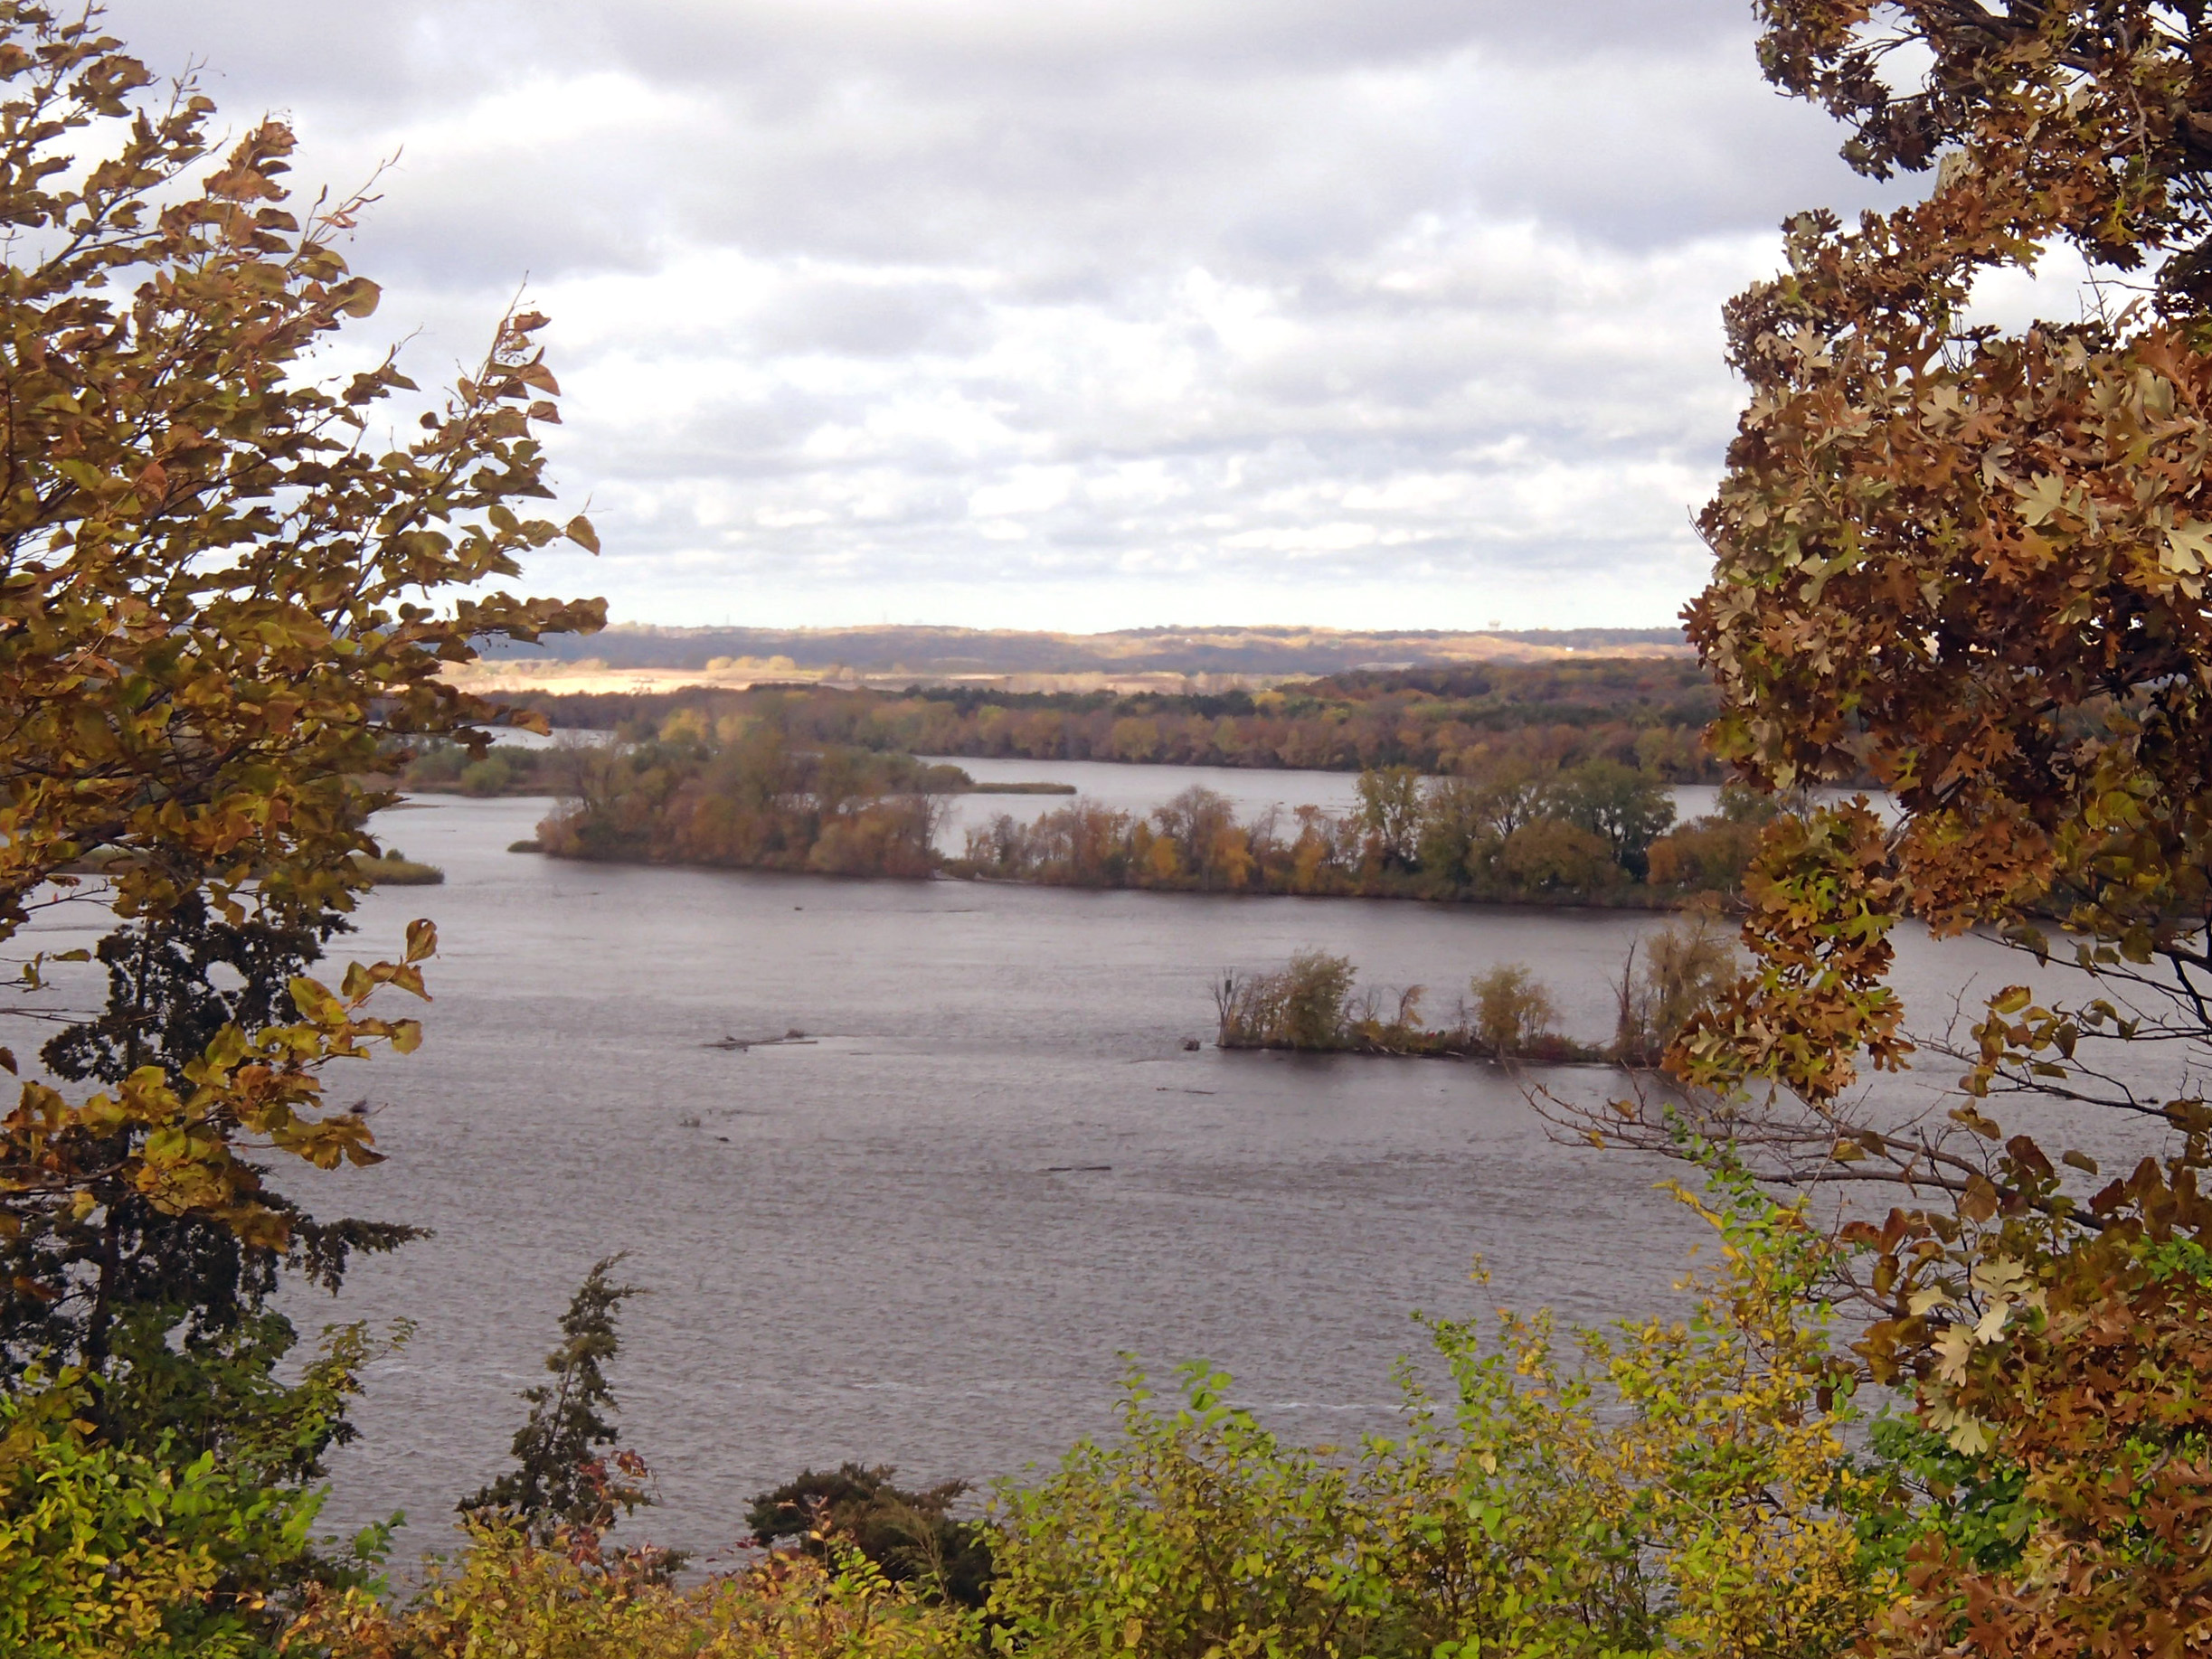 View from Schaar's Bluff across the river